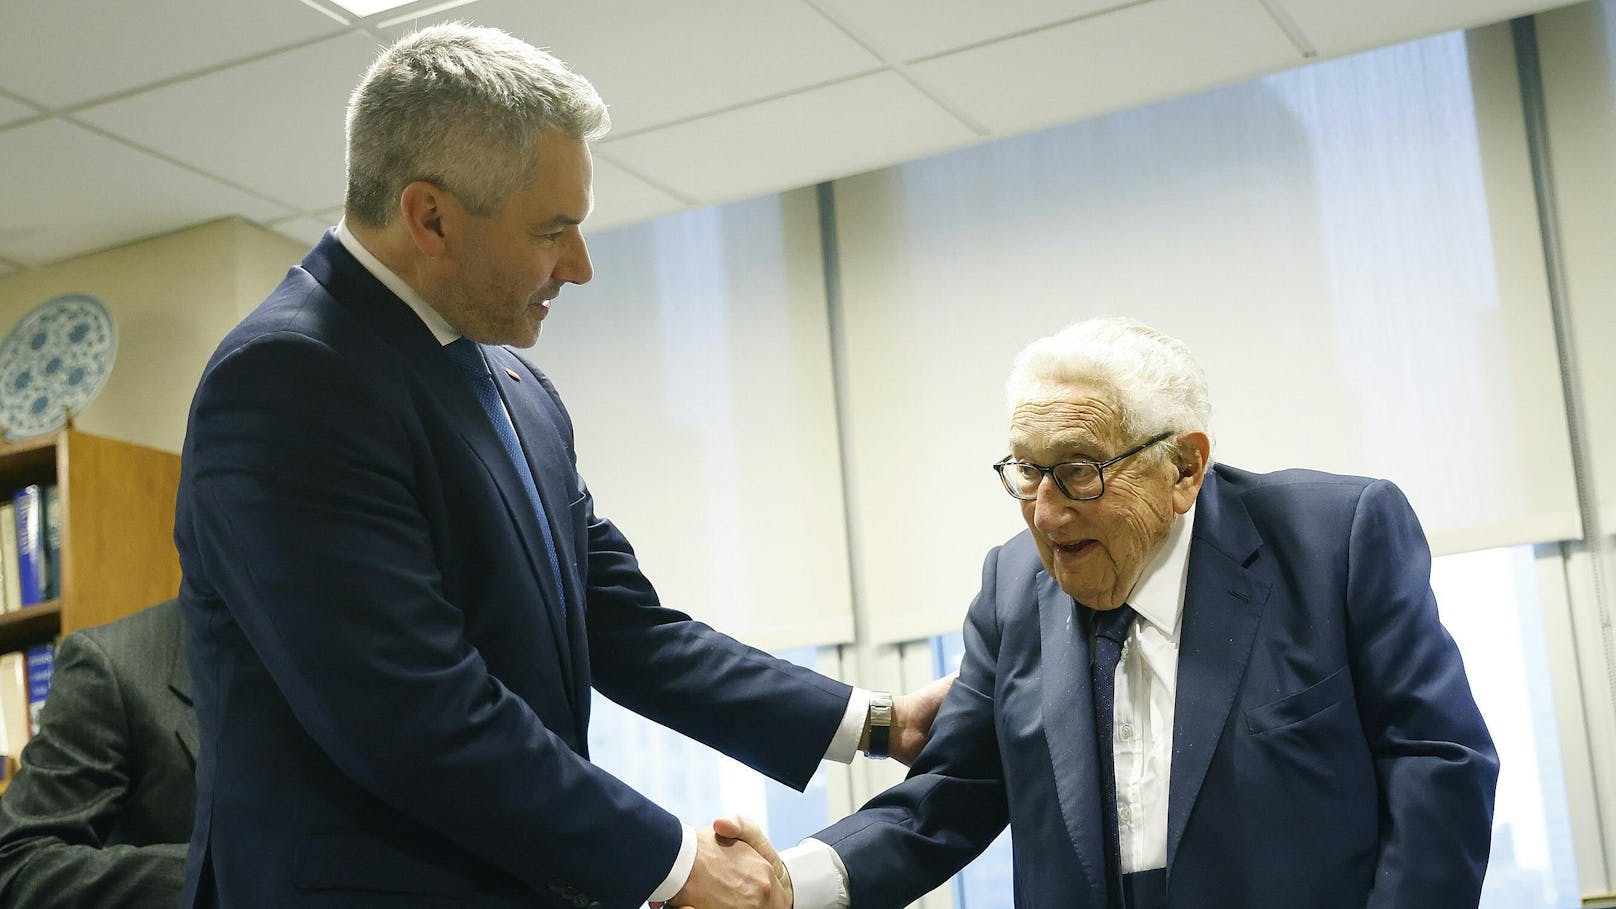 <strong>30.11.2023: Ex-US-Außenminister Henry Kissinger ist tot.</strong> Der ehemalige US-Außenminister Henry Kissinger ist tot. Die umstrittene Diplomatie-Legende wurde 100 Jahre alt. <a rel="nofollow" data-li-document-ref="120007095" href="https://www.heute.at/s/-120007095"><strong>Weiterlesen >></strong></a>